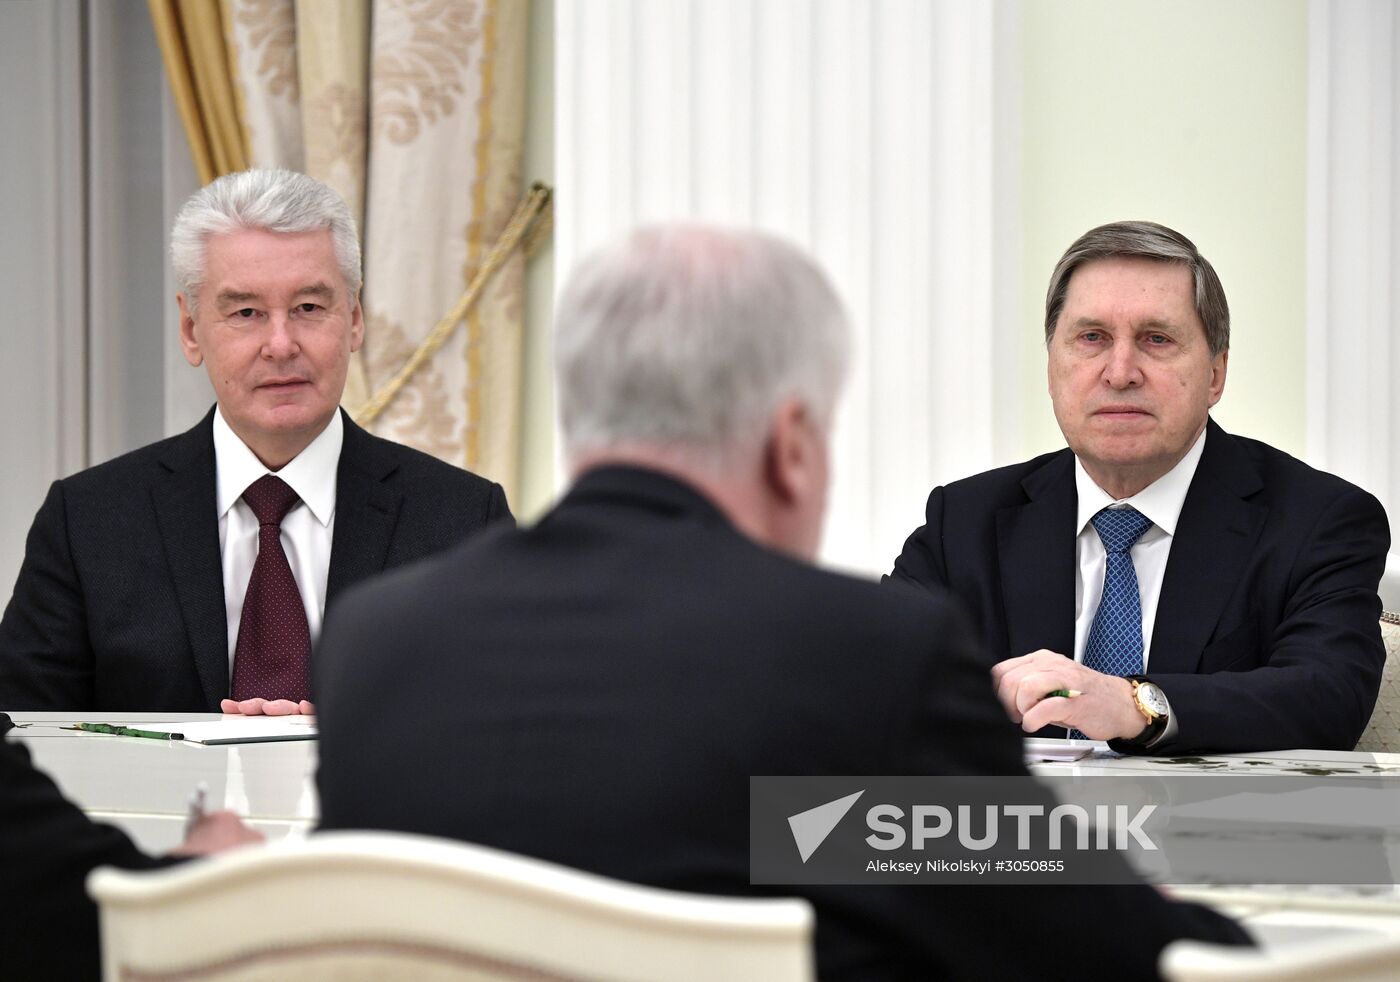 Russian President Vladimir Putin meets with Bavarian Prime Minister Horst Seehofer